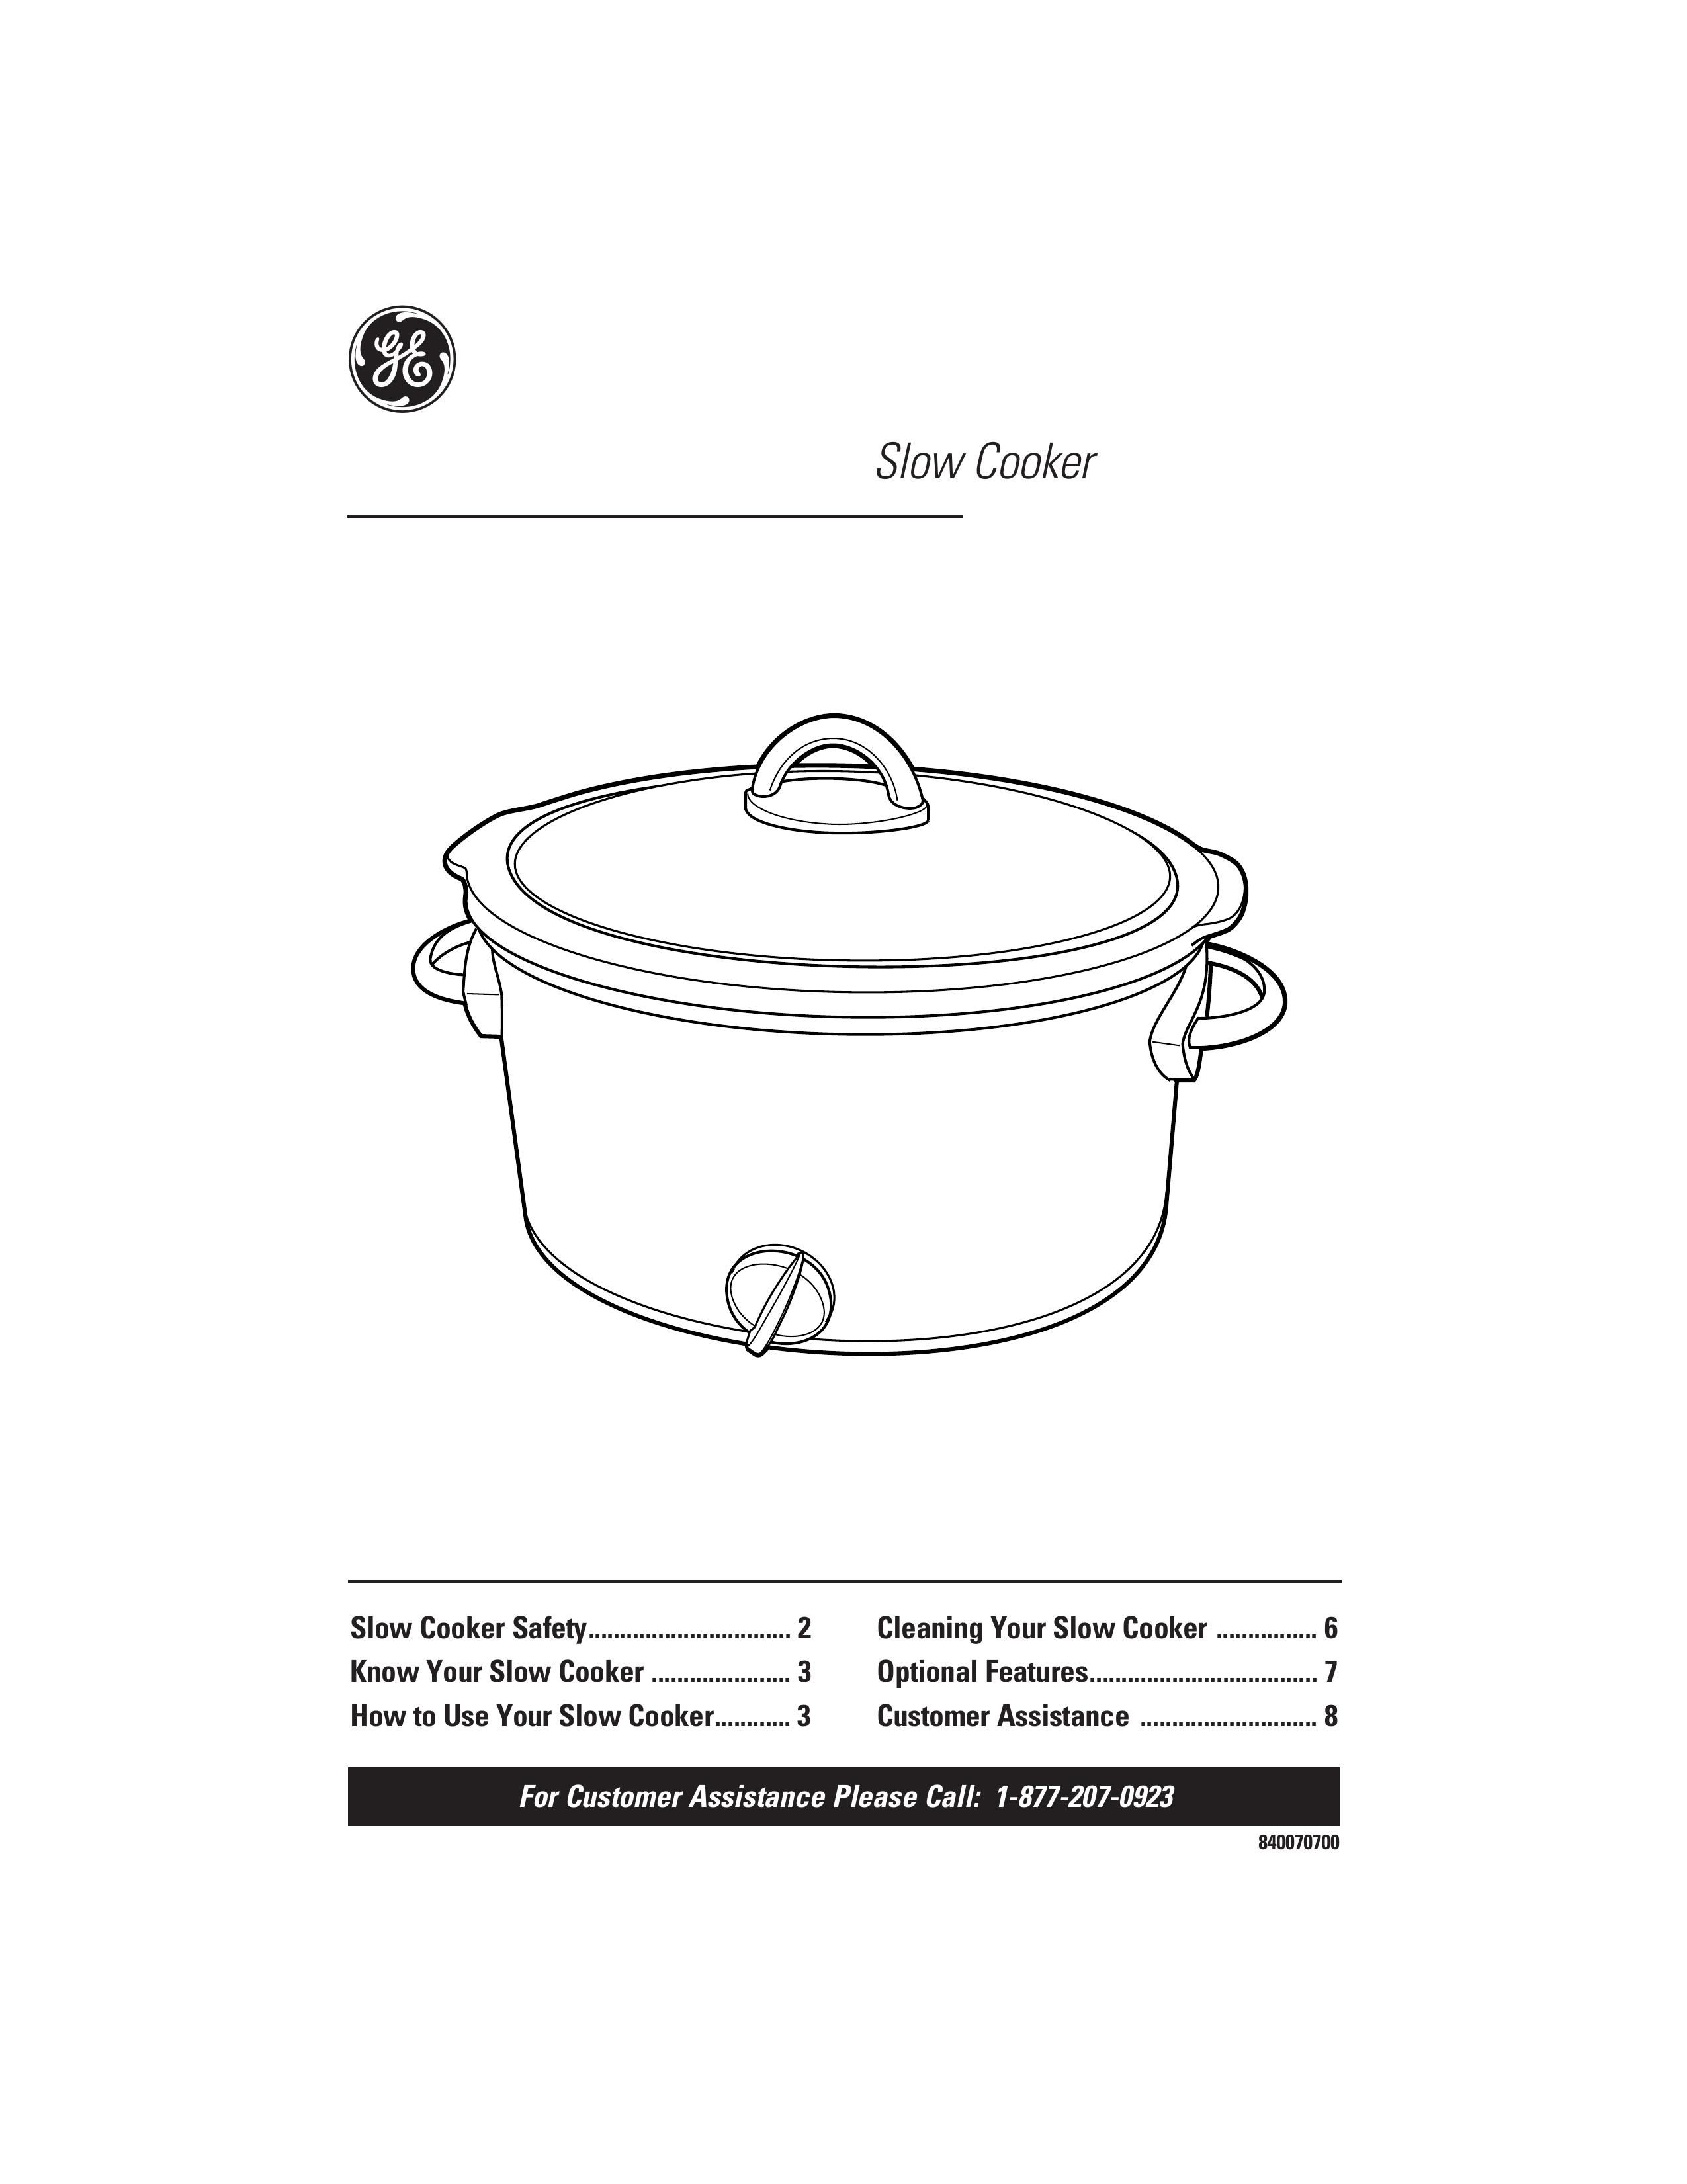 GE 106661 Slow Cooker User Manual